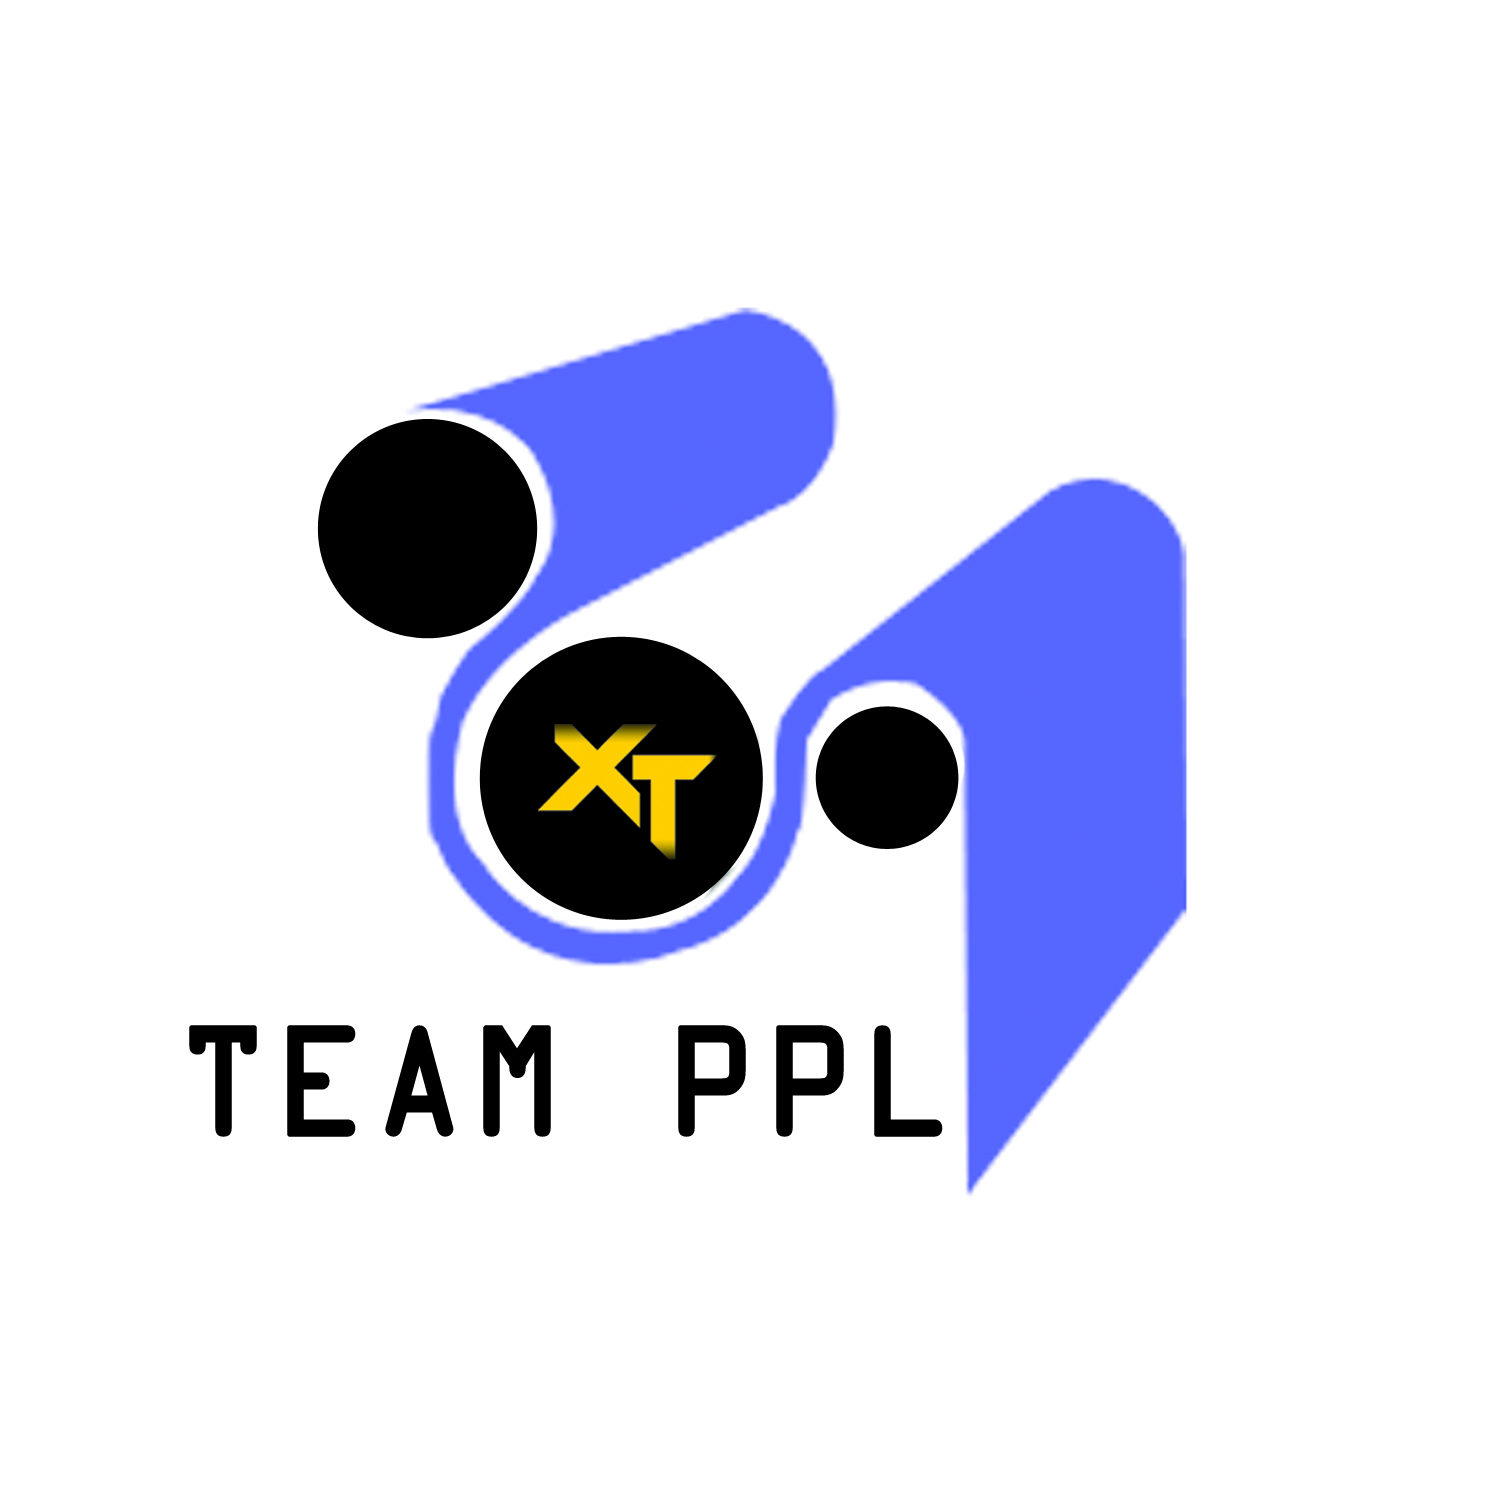 Team PPL